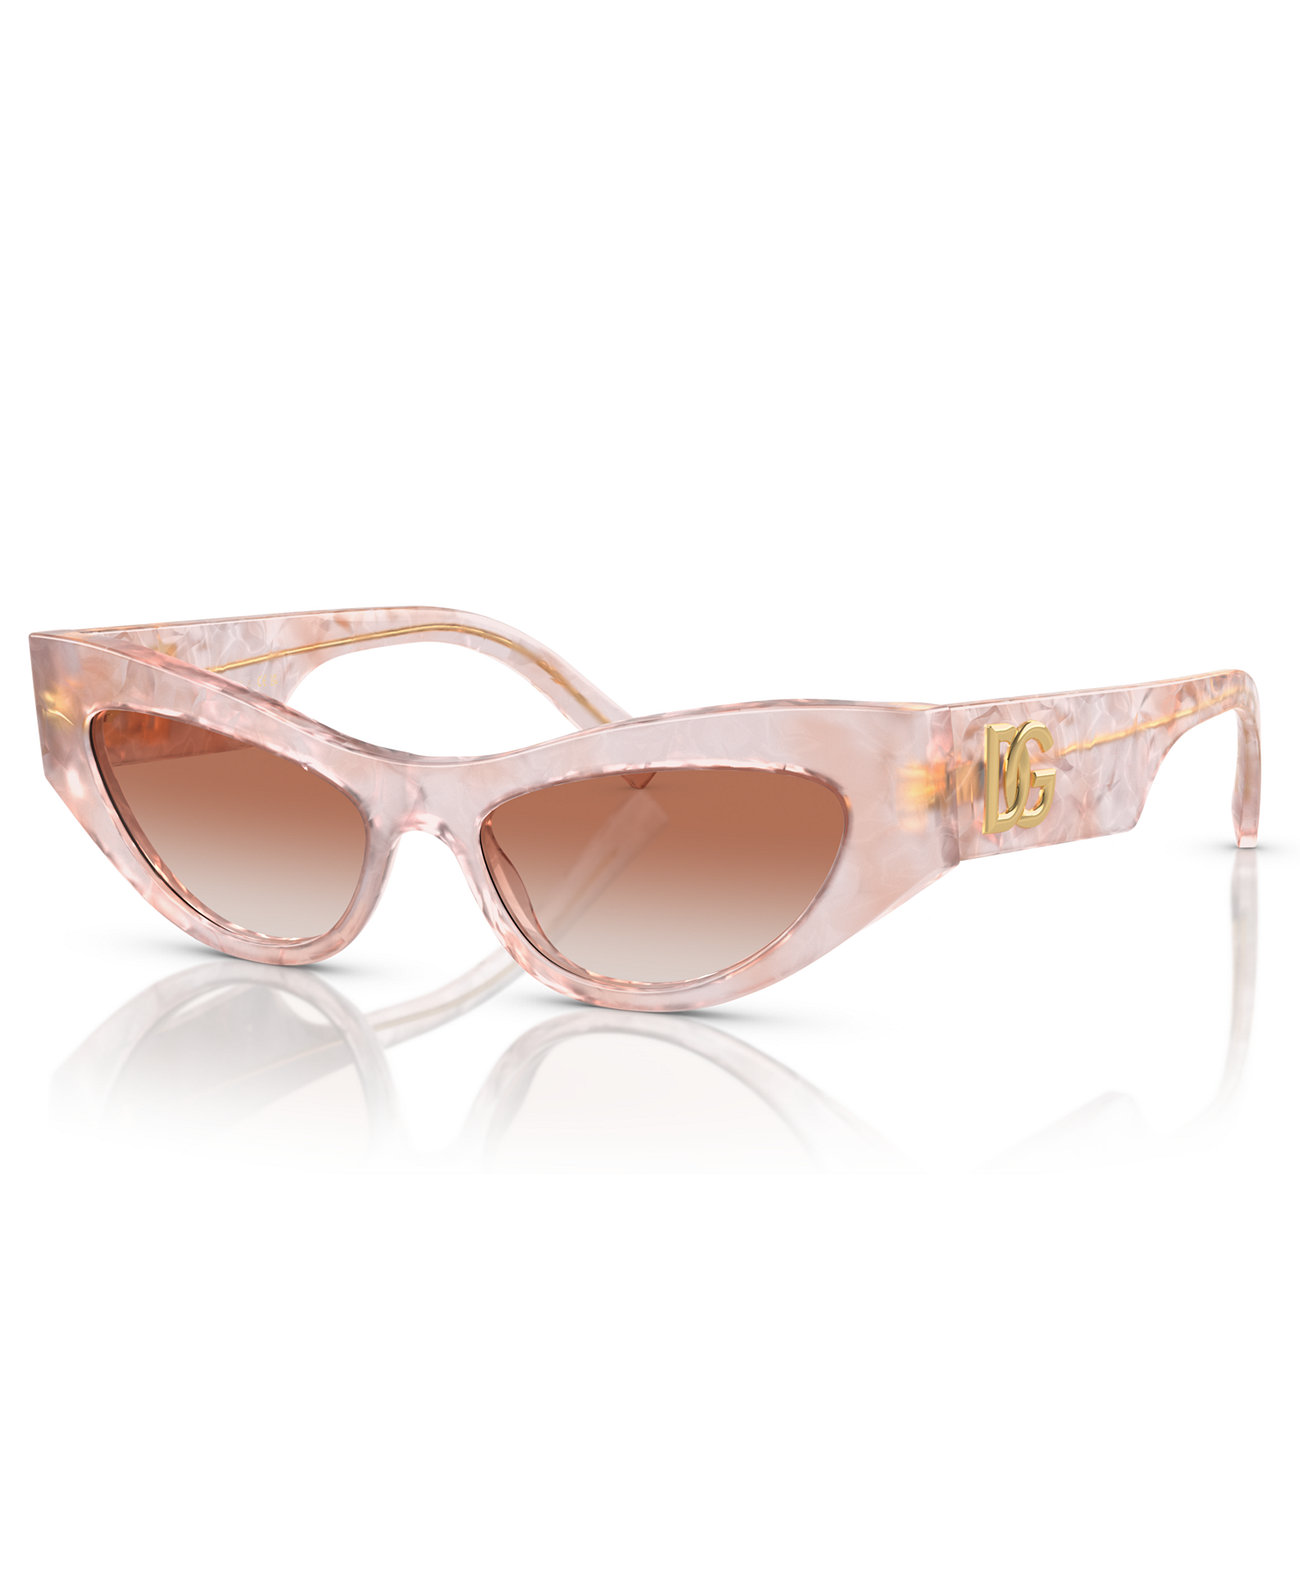 Women's Sunglasses, Gradient DG4450 Dolce & Gabbana